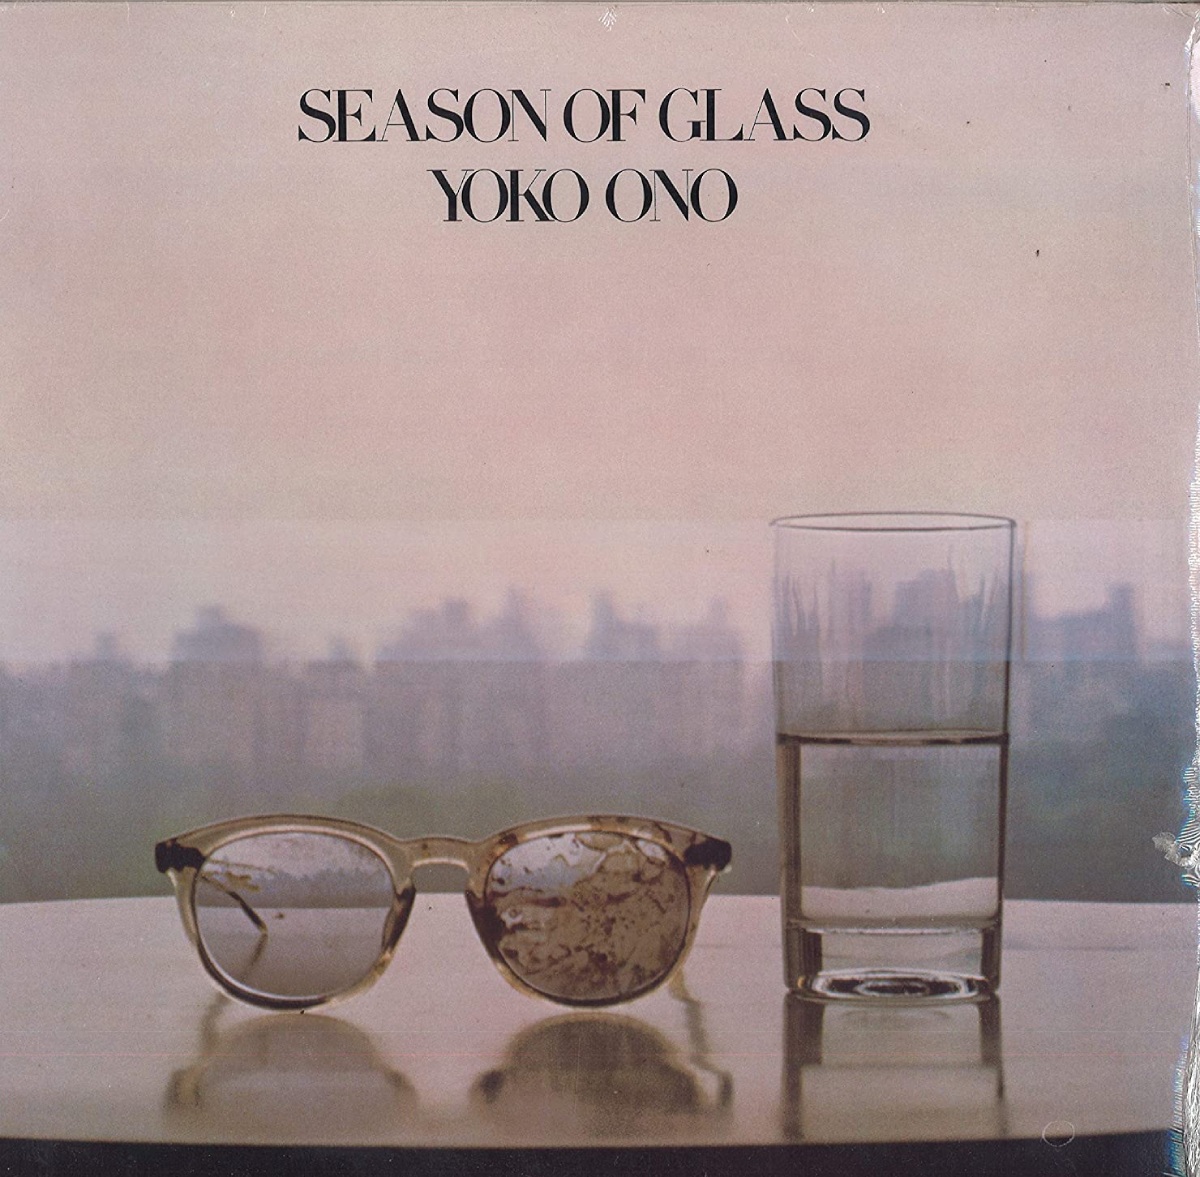 "Season of Glass" (Yoko Ono album cover)